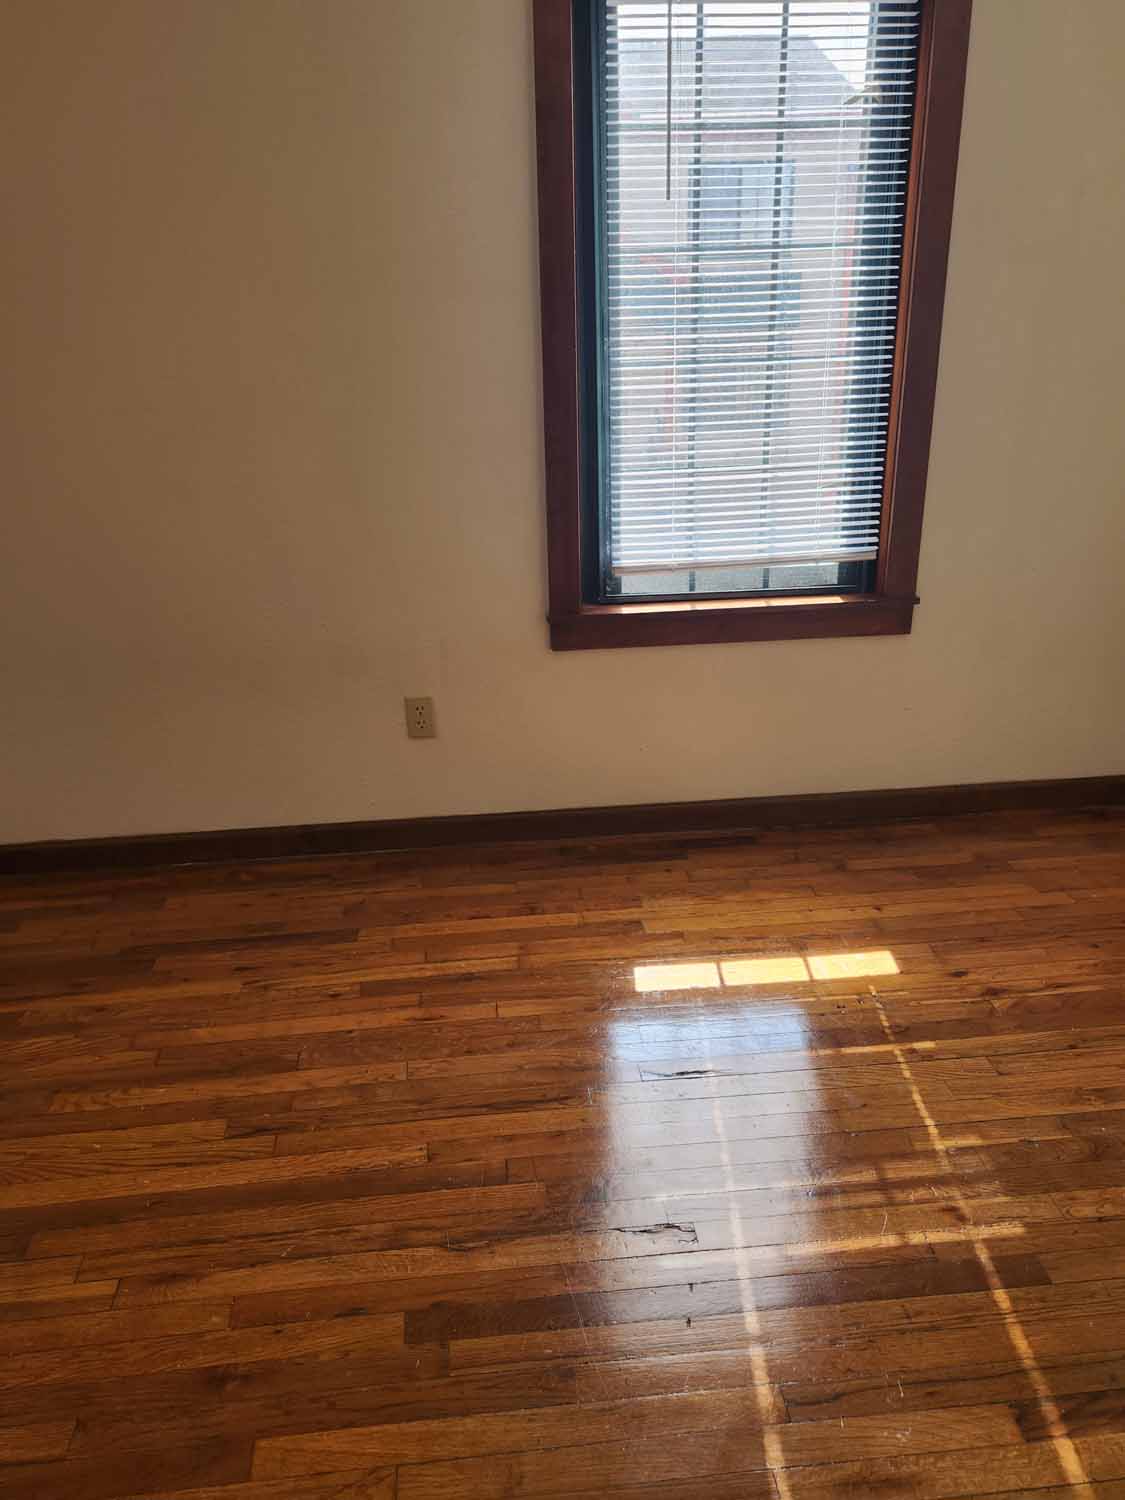 A room with hardwood flooring.